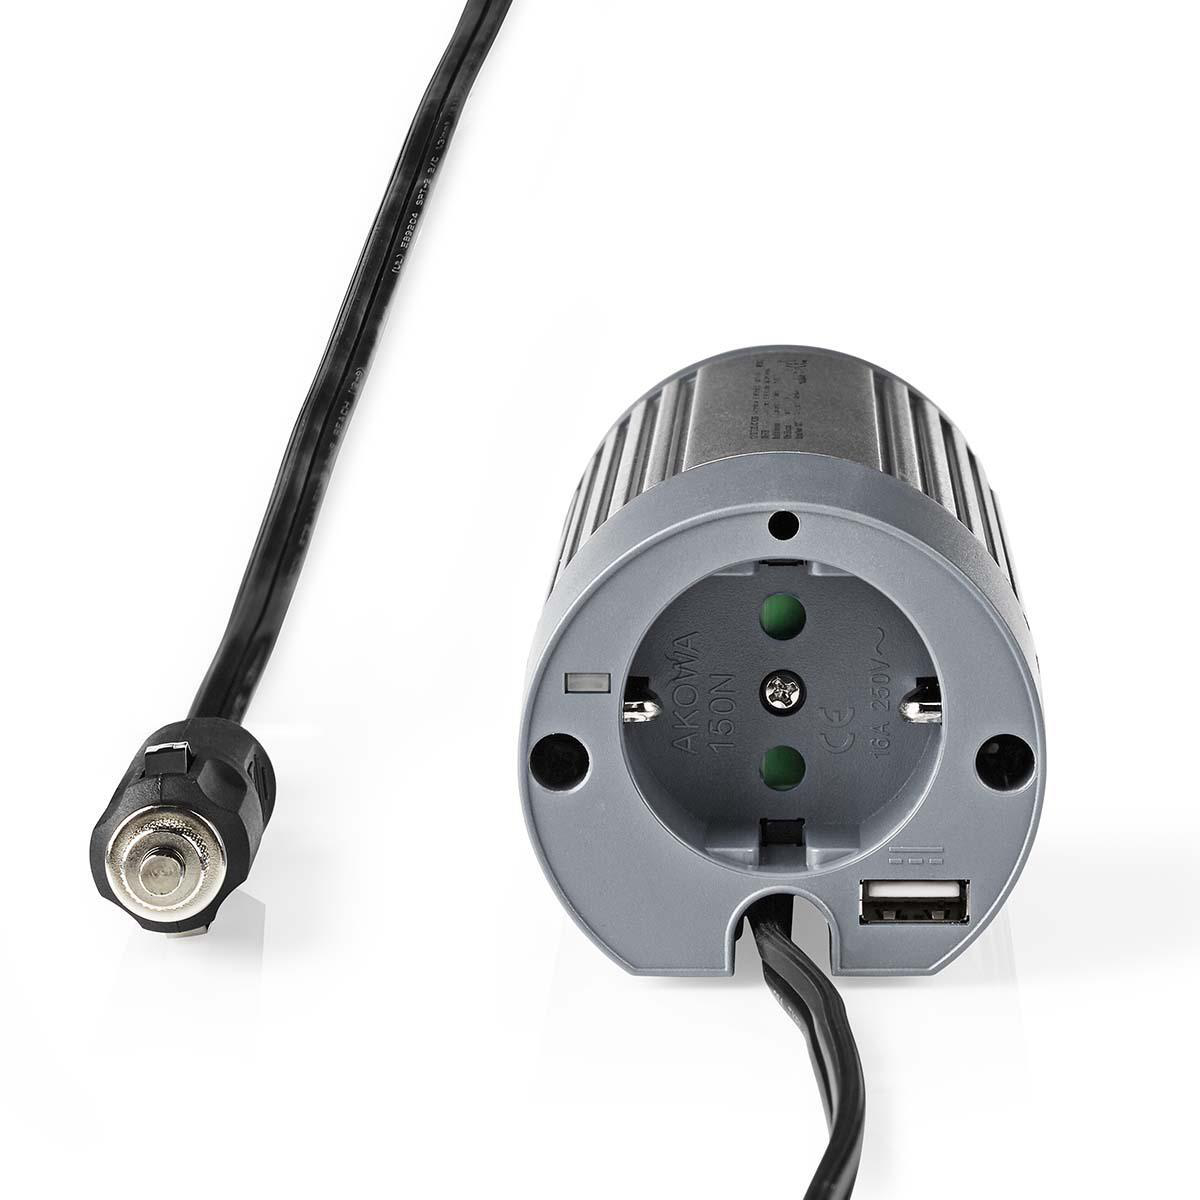 Power Inverter Modified Sine Wave, Input voltage: 12 V DC, Device power  output connection(s): Type F (CEE 7/3) / USB-A, 230 V AC 50 Hz, 100 W, Peak power output: 200 W, Cigarette Lighter Plug